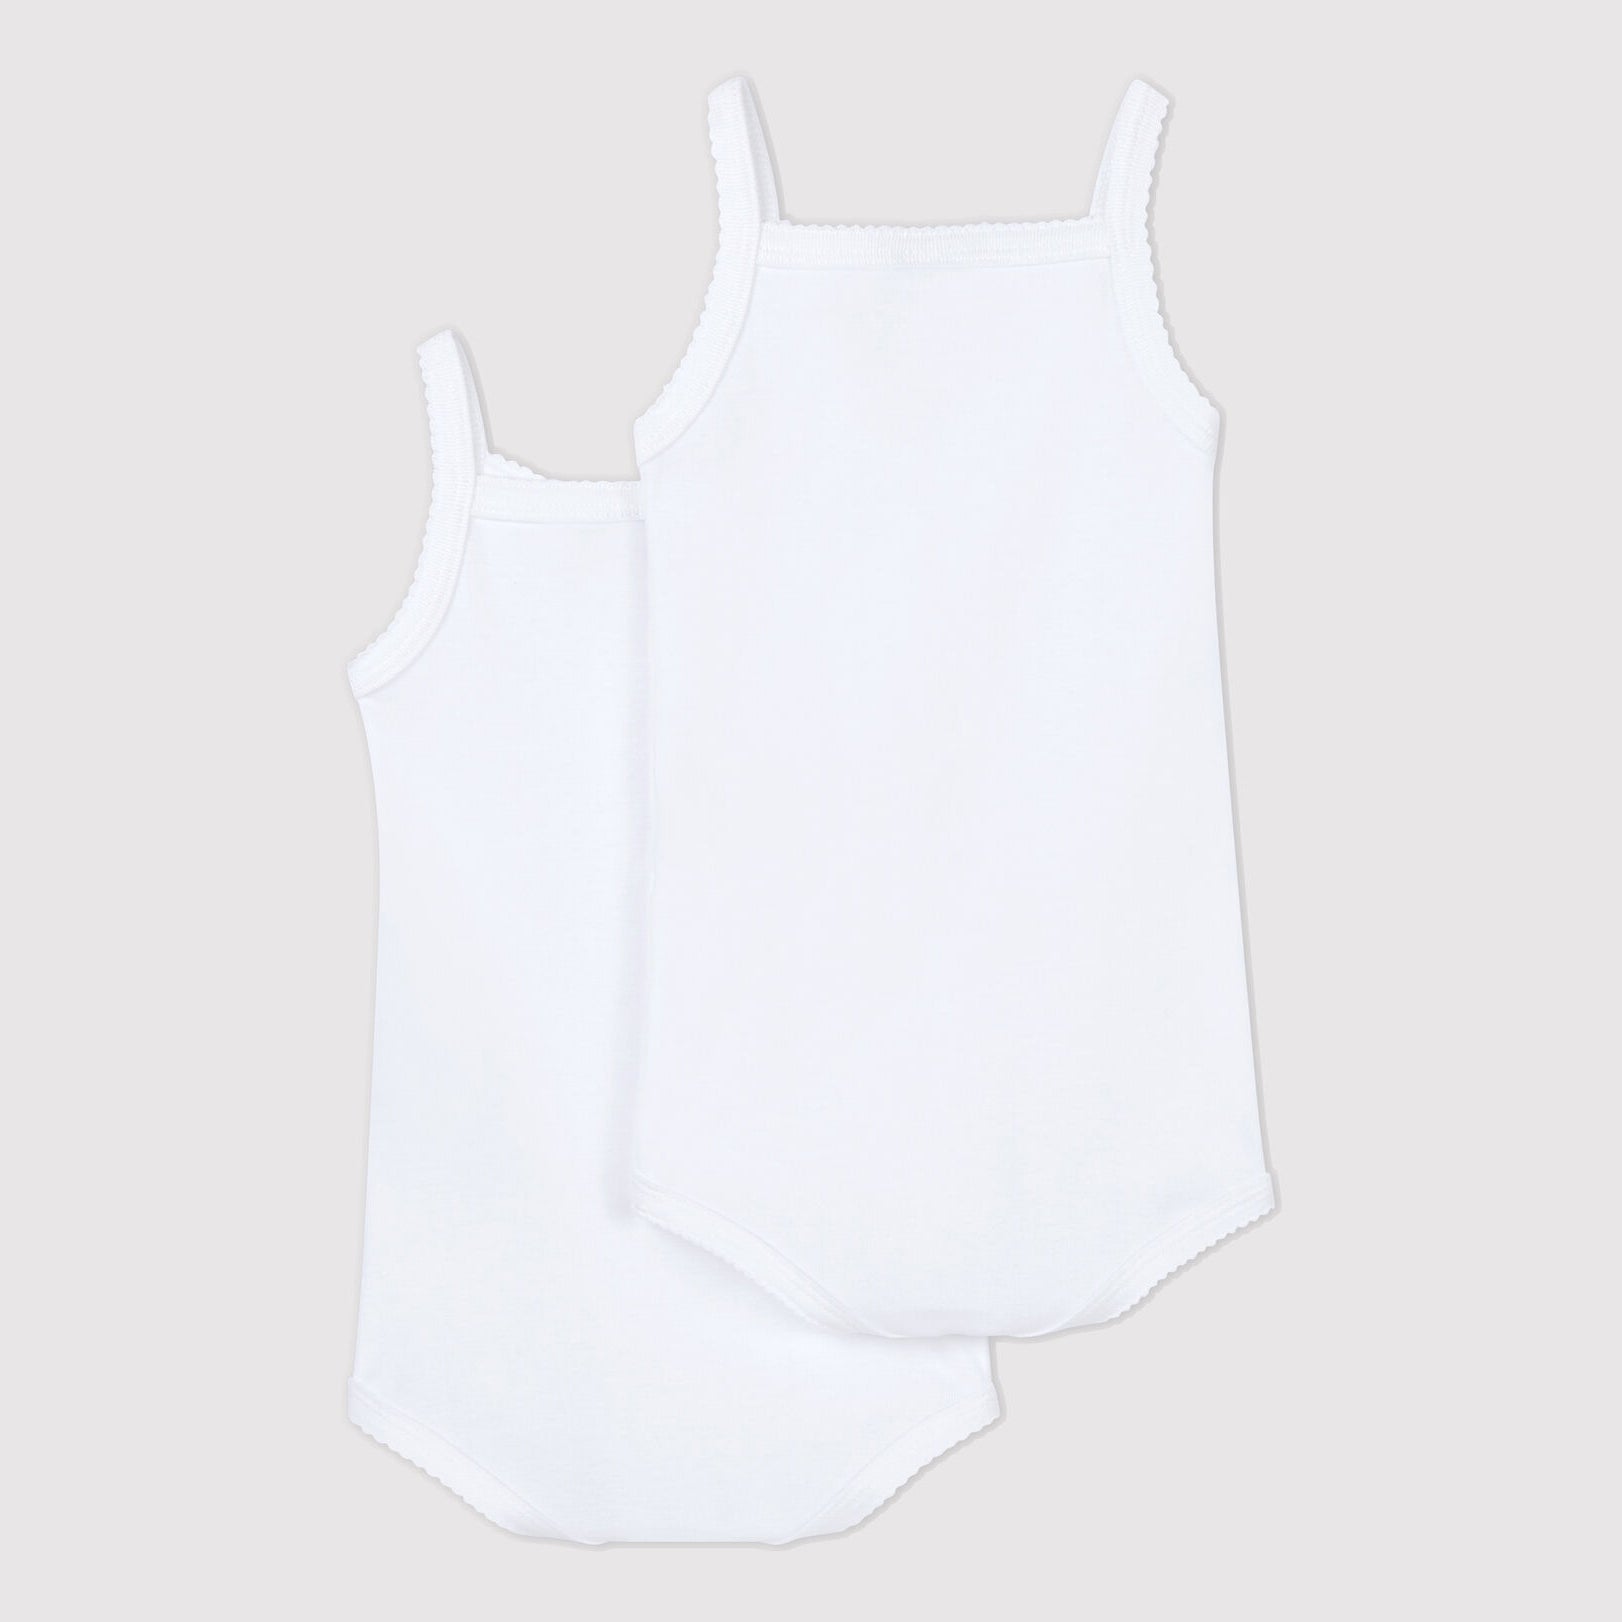 Baby Girls White Cotton Babysuit Set(2 Pack)